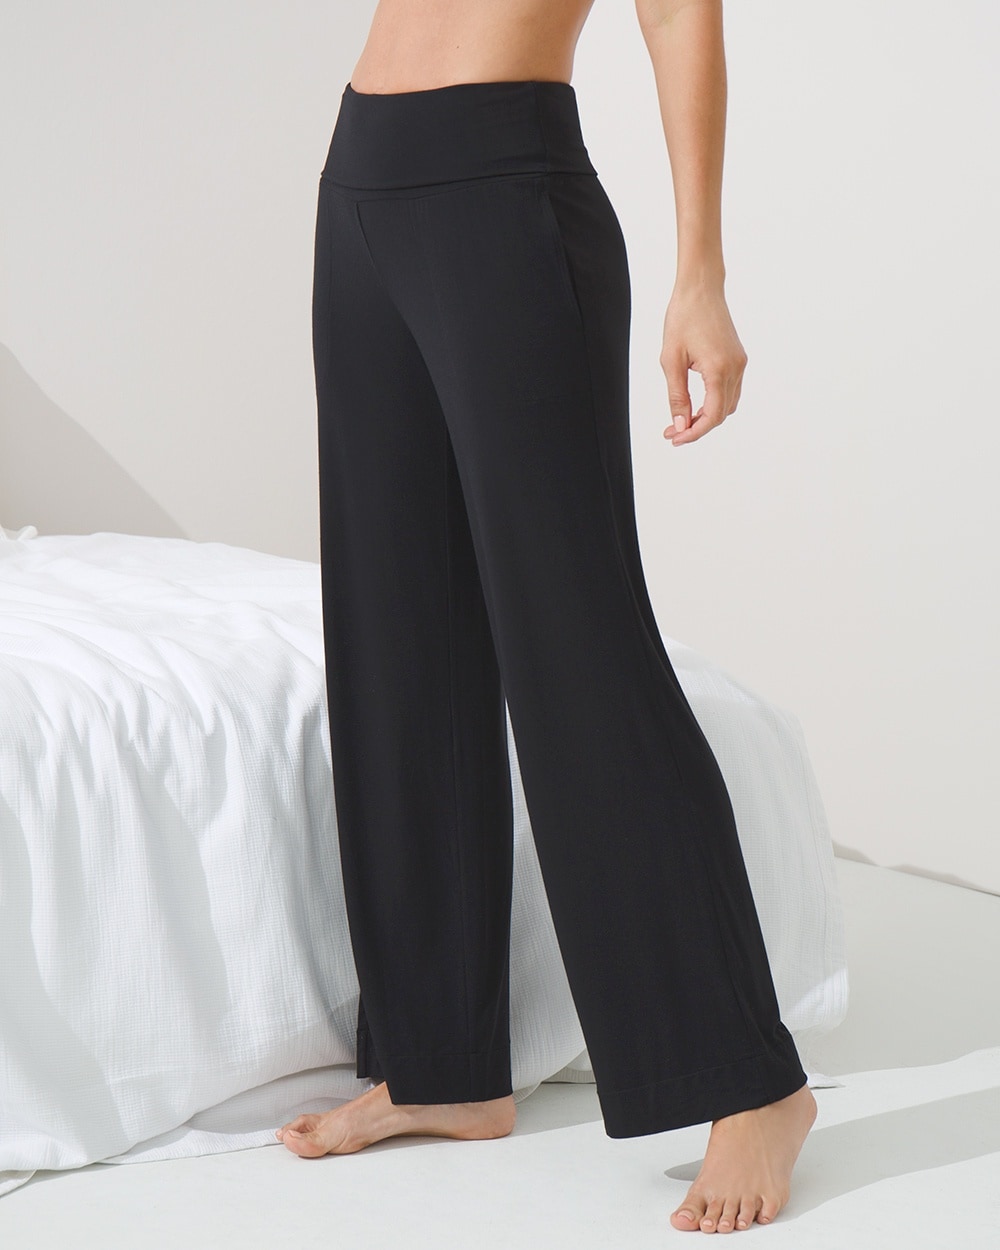 Vislivin Women's Stretch Knit Pajama Pants Modal Sleep Pant Black Thin S at   Women's Clothing store